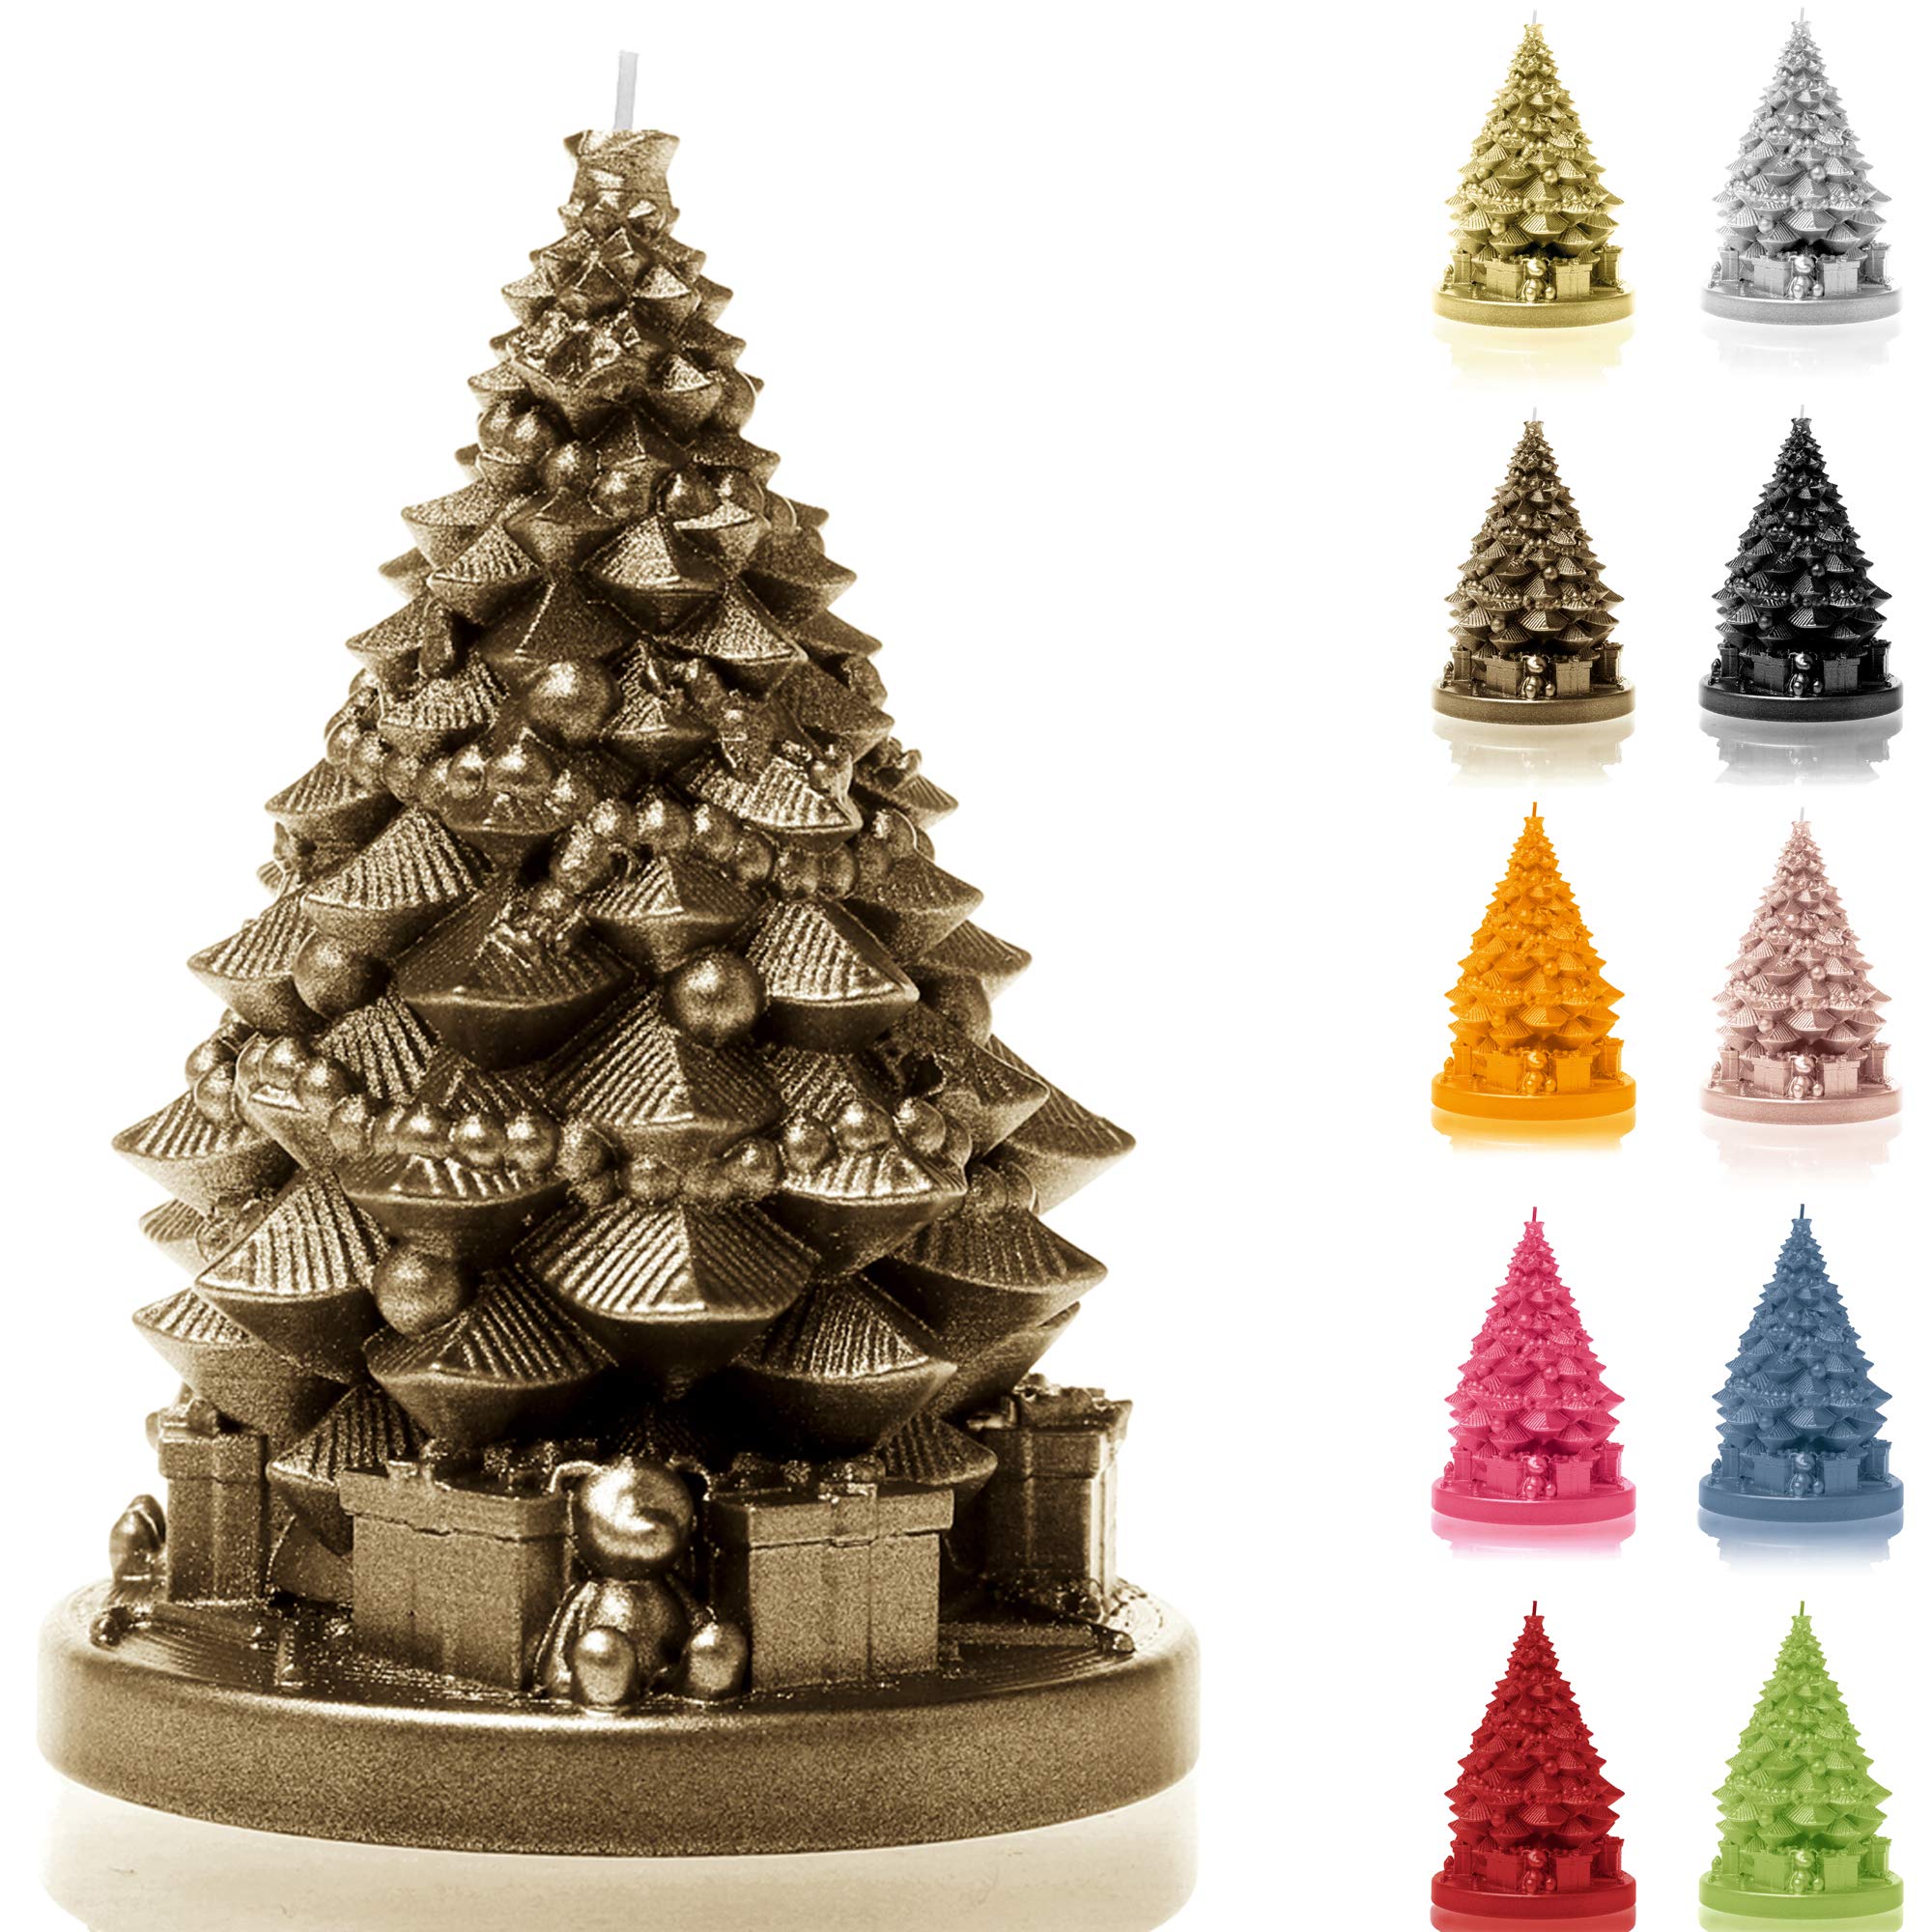 Candellana Christmass Tree with Gifts Kerze - Weihnachten Deko - Weihnachtsartikel - Deko Kerze - Weihnachtliche Kerzen - Weohnachtsgeschenk - Handgemachte Geschenke